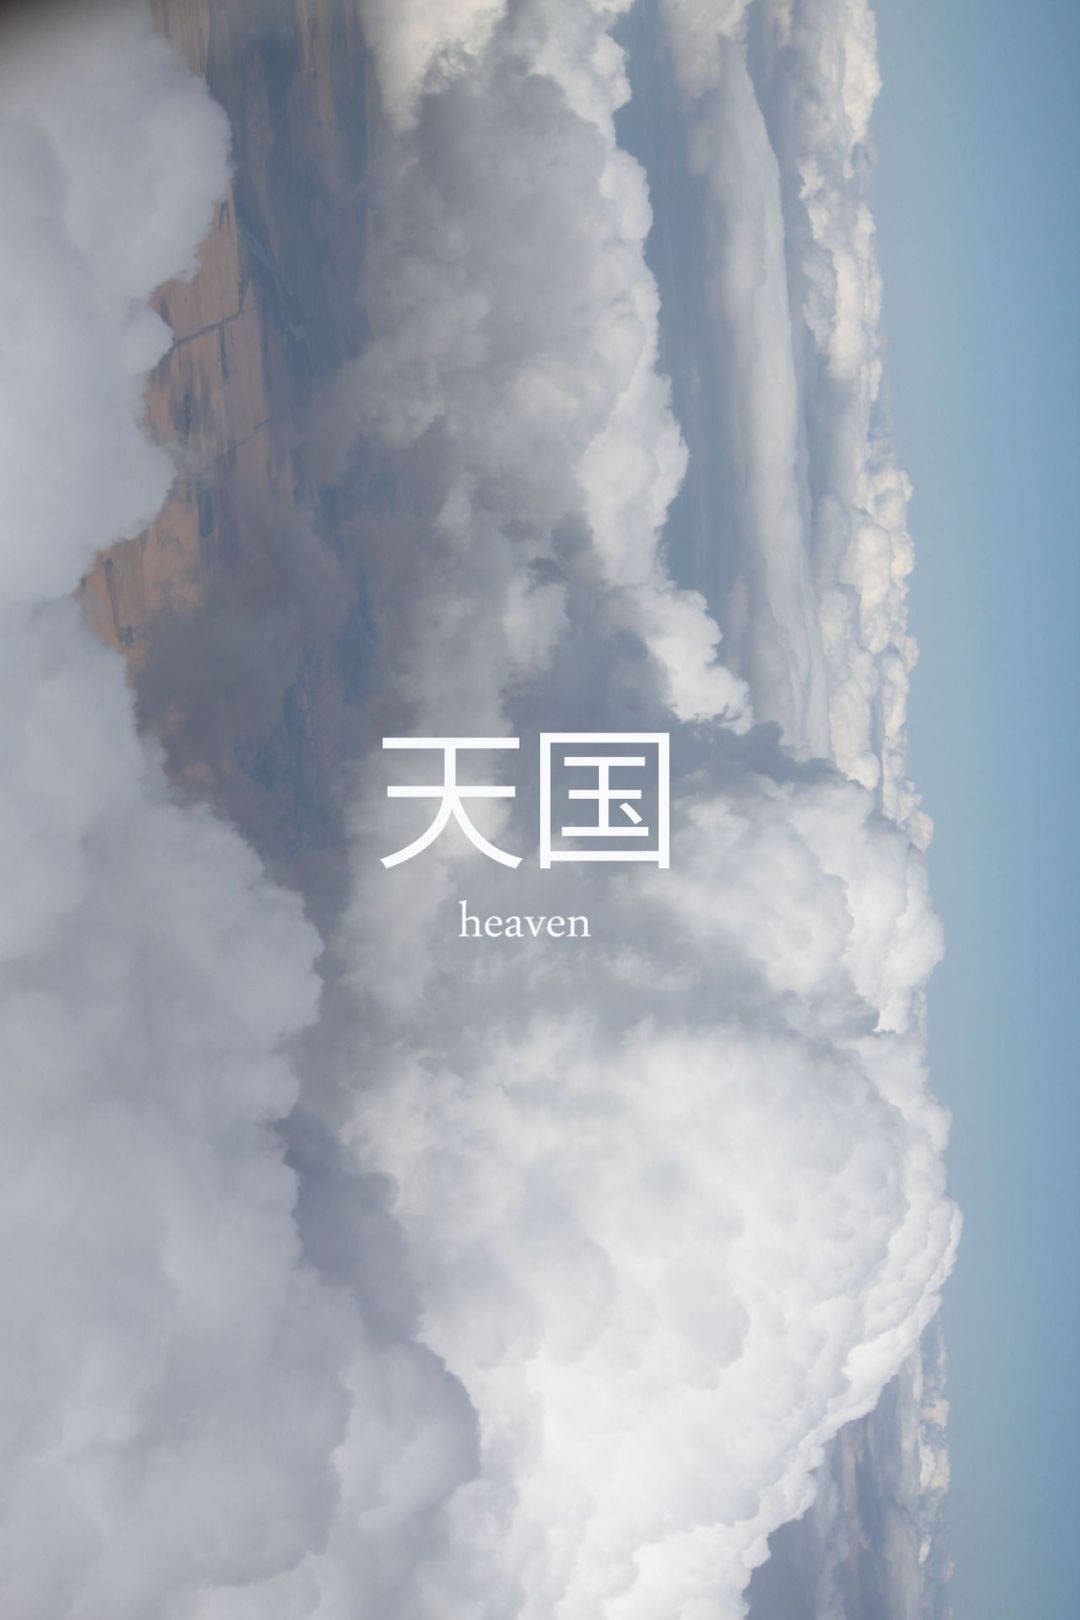 White Aesthetic Tumblr Clouds Heaven Kanji Wallpaper